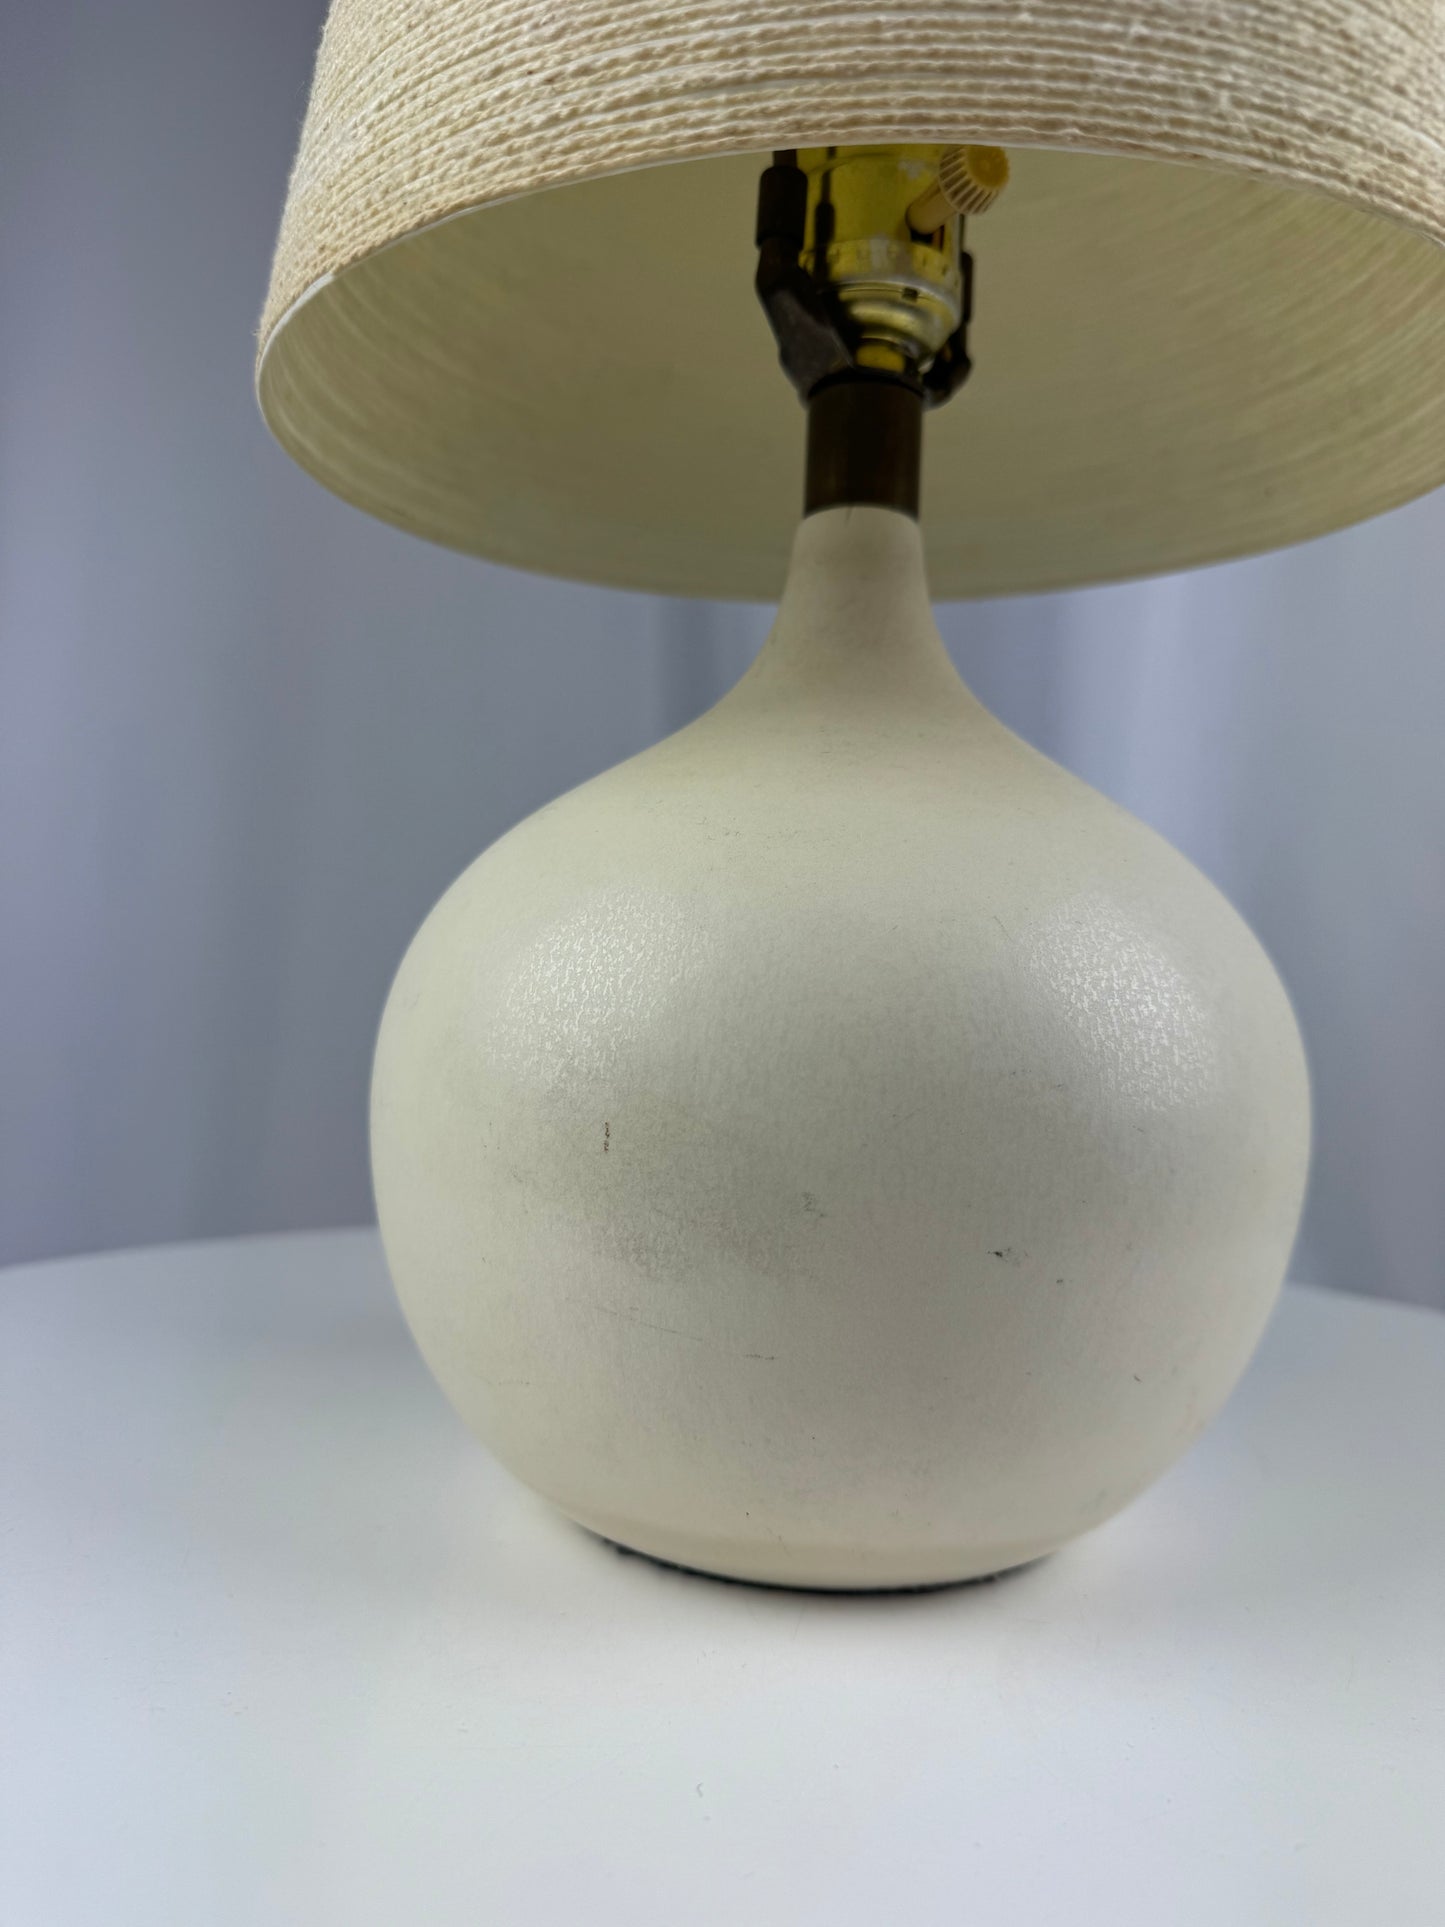 Small White Lotte Lamp